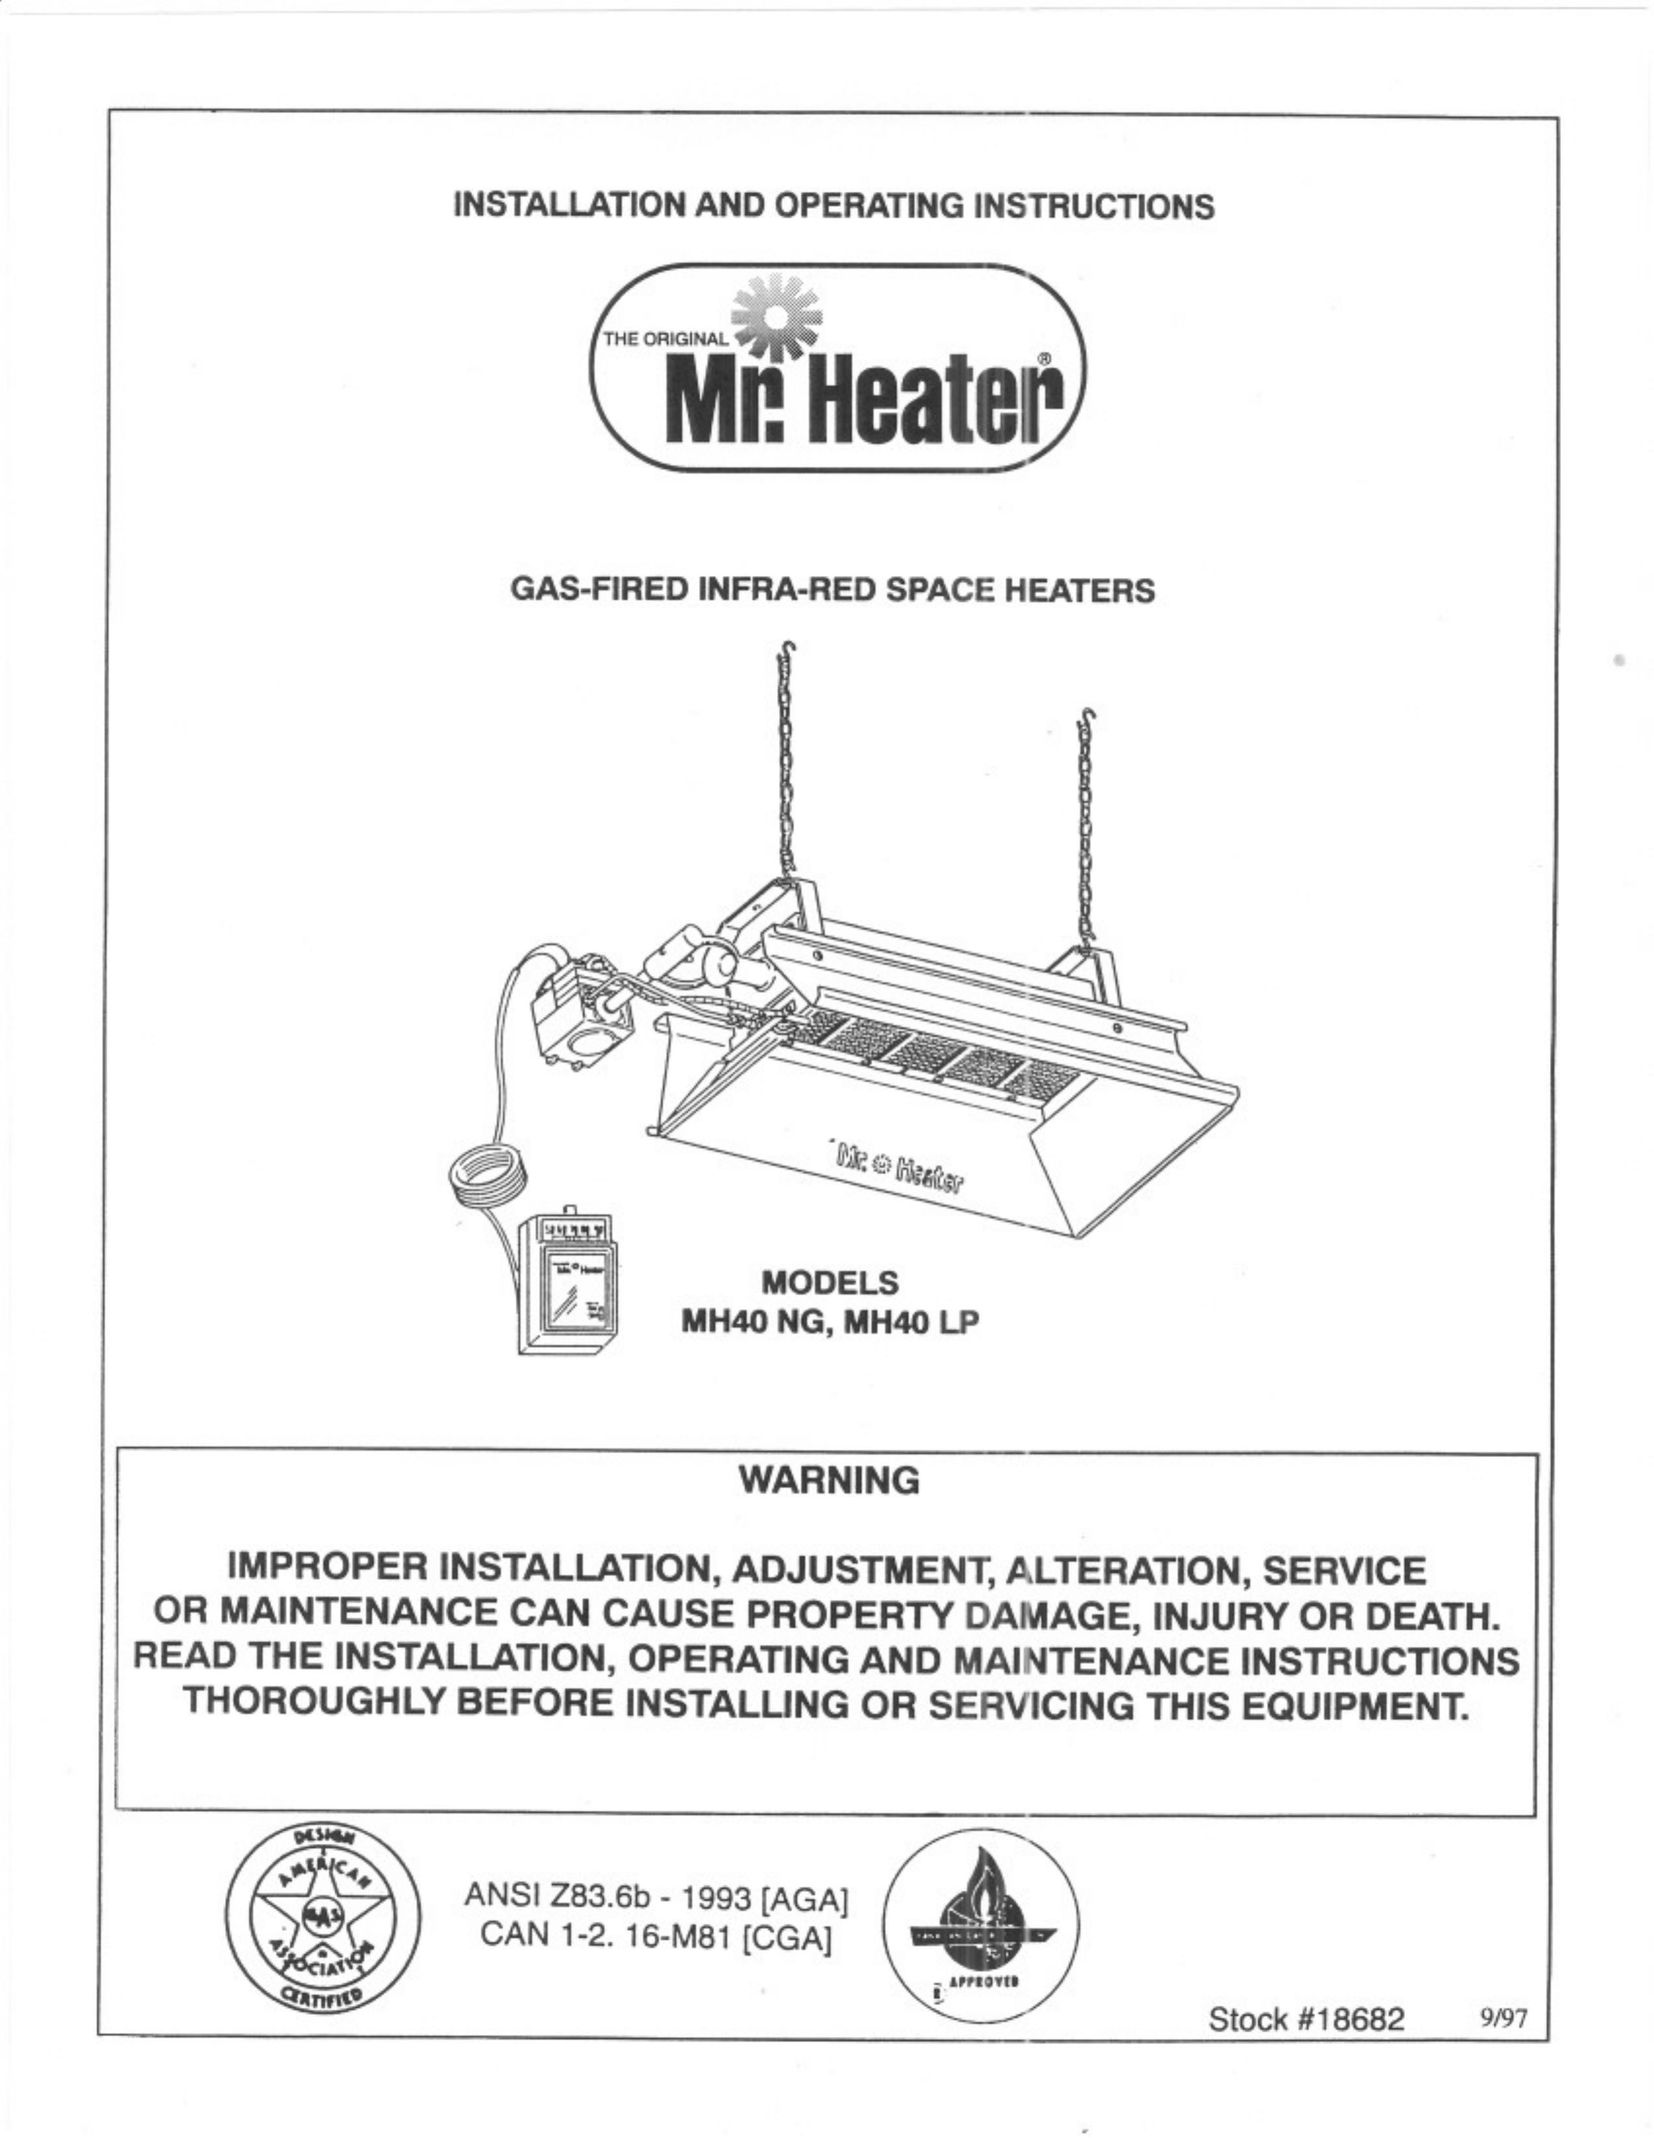 Mr. Heater MH40 LP Gas Heater User Manual